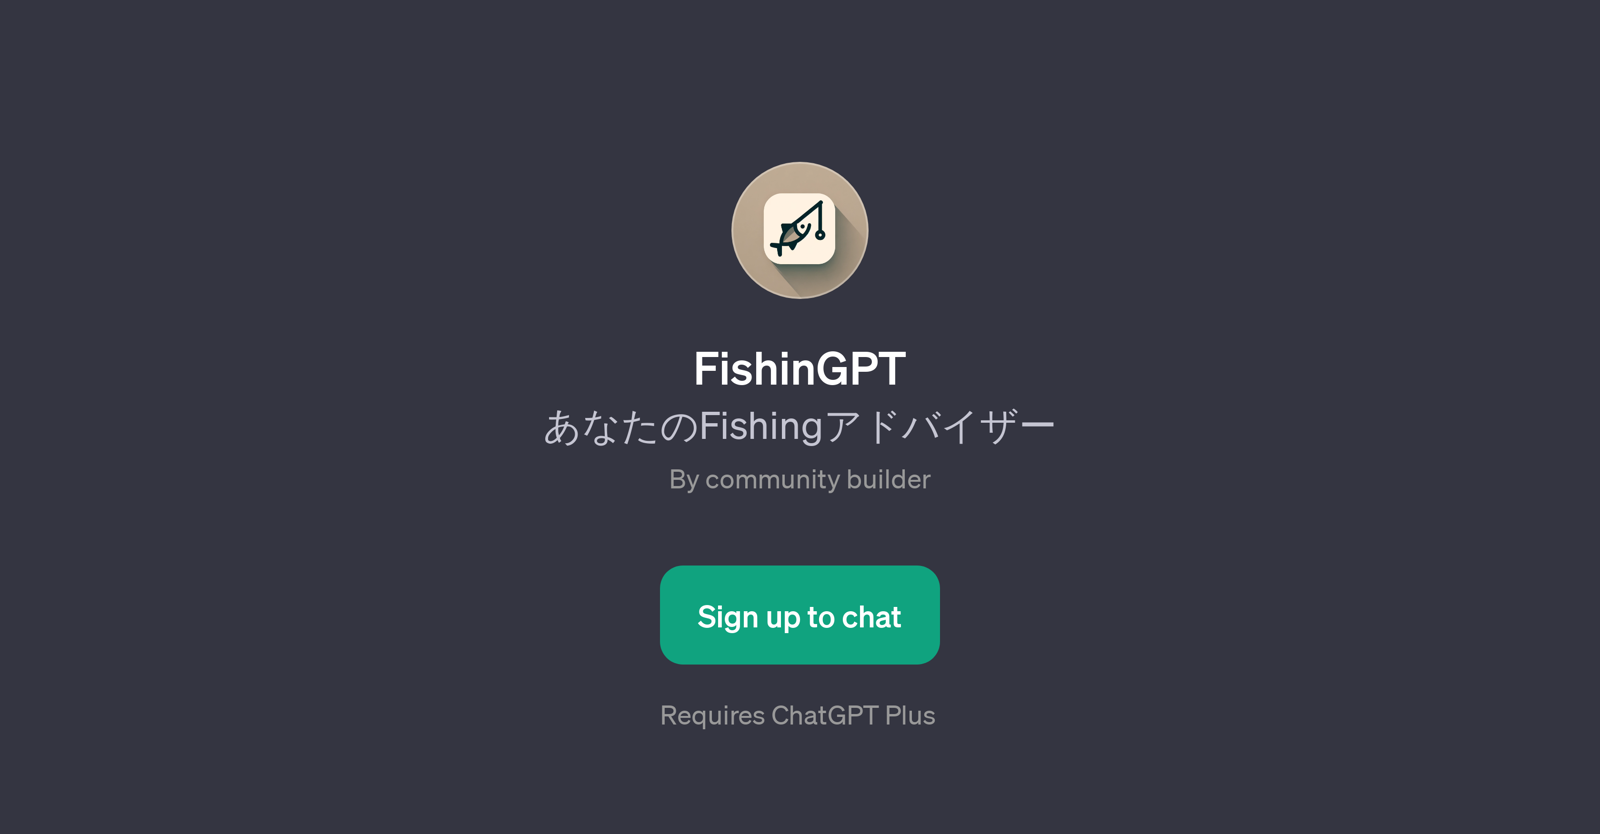 FishinGPT website